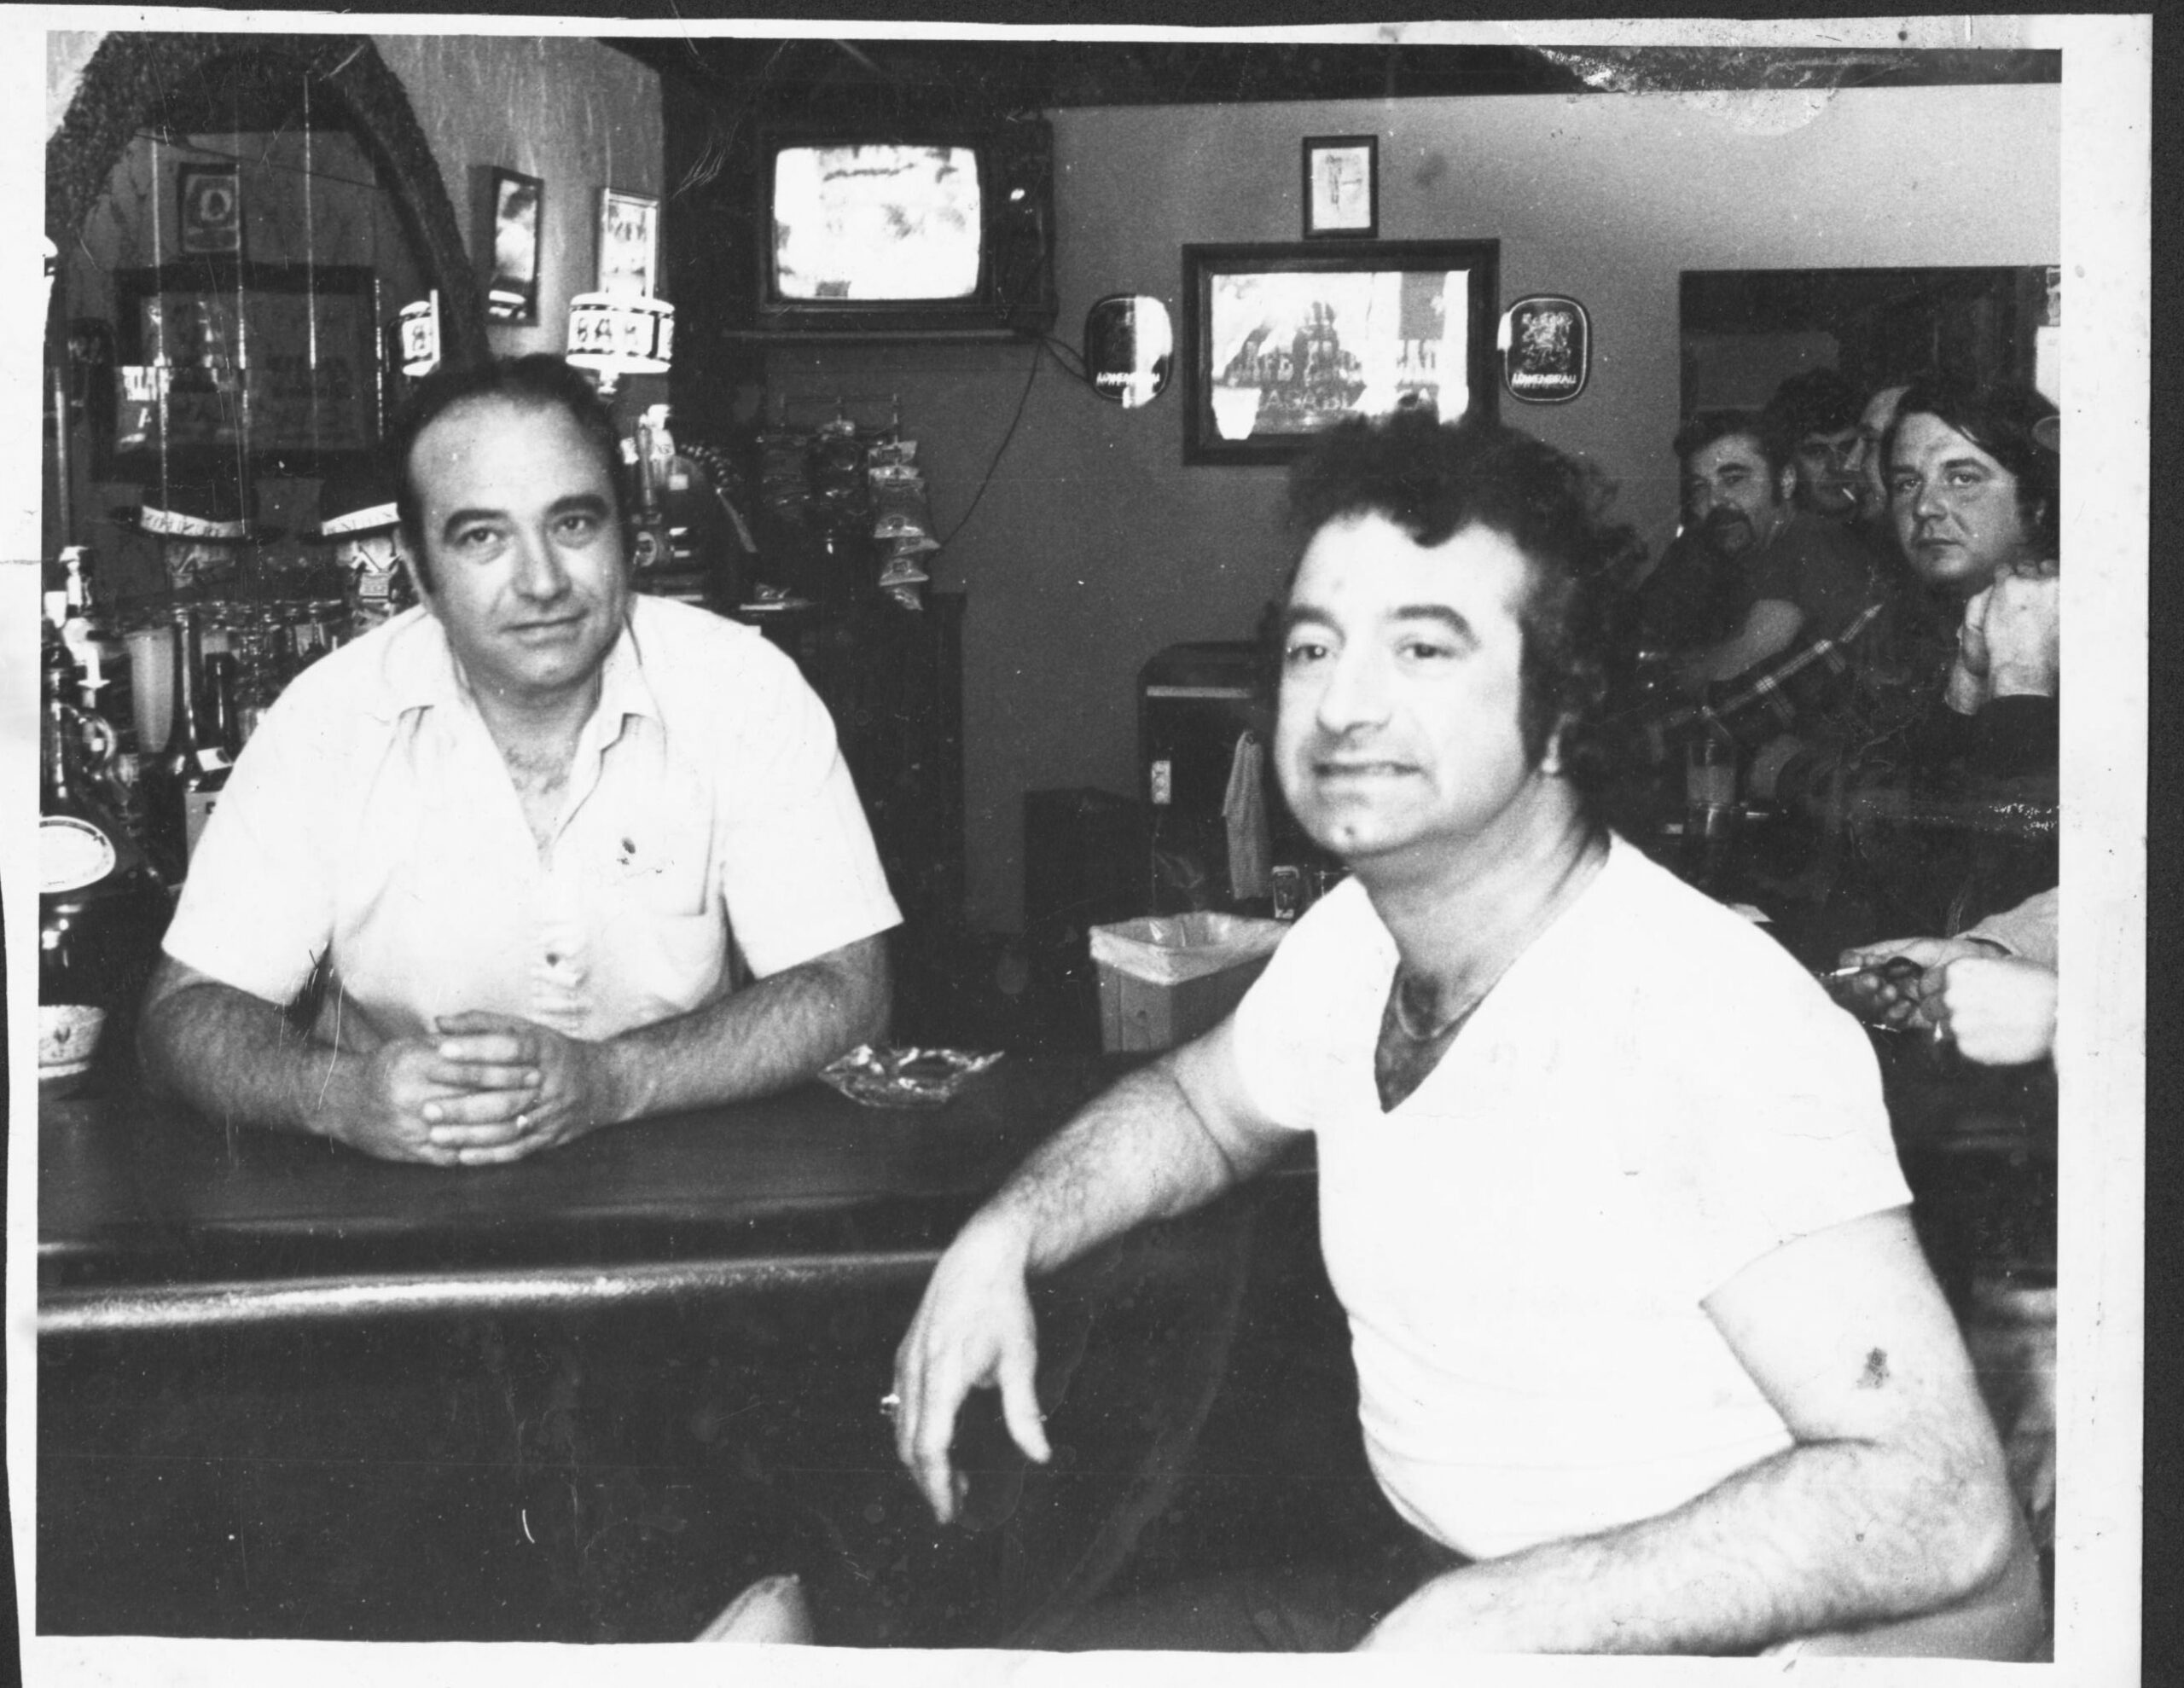 Billy DePetris, right, with his brother, Rick DePetris Jr., at Rick's Cafe in Bridgehampton. COURTESY DEPETRIS FAMILY